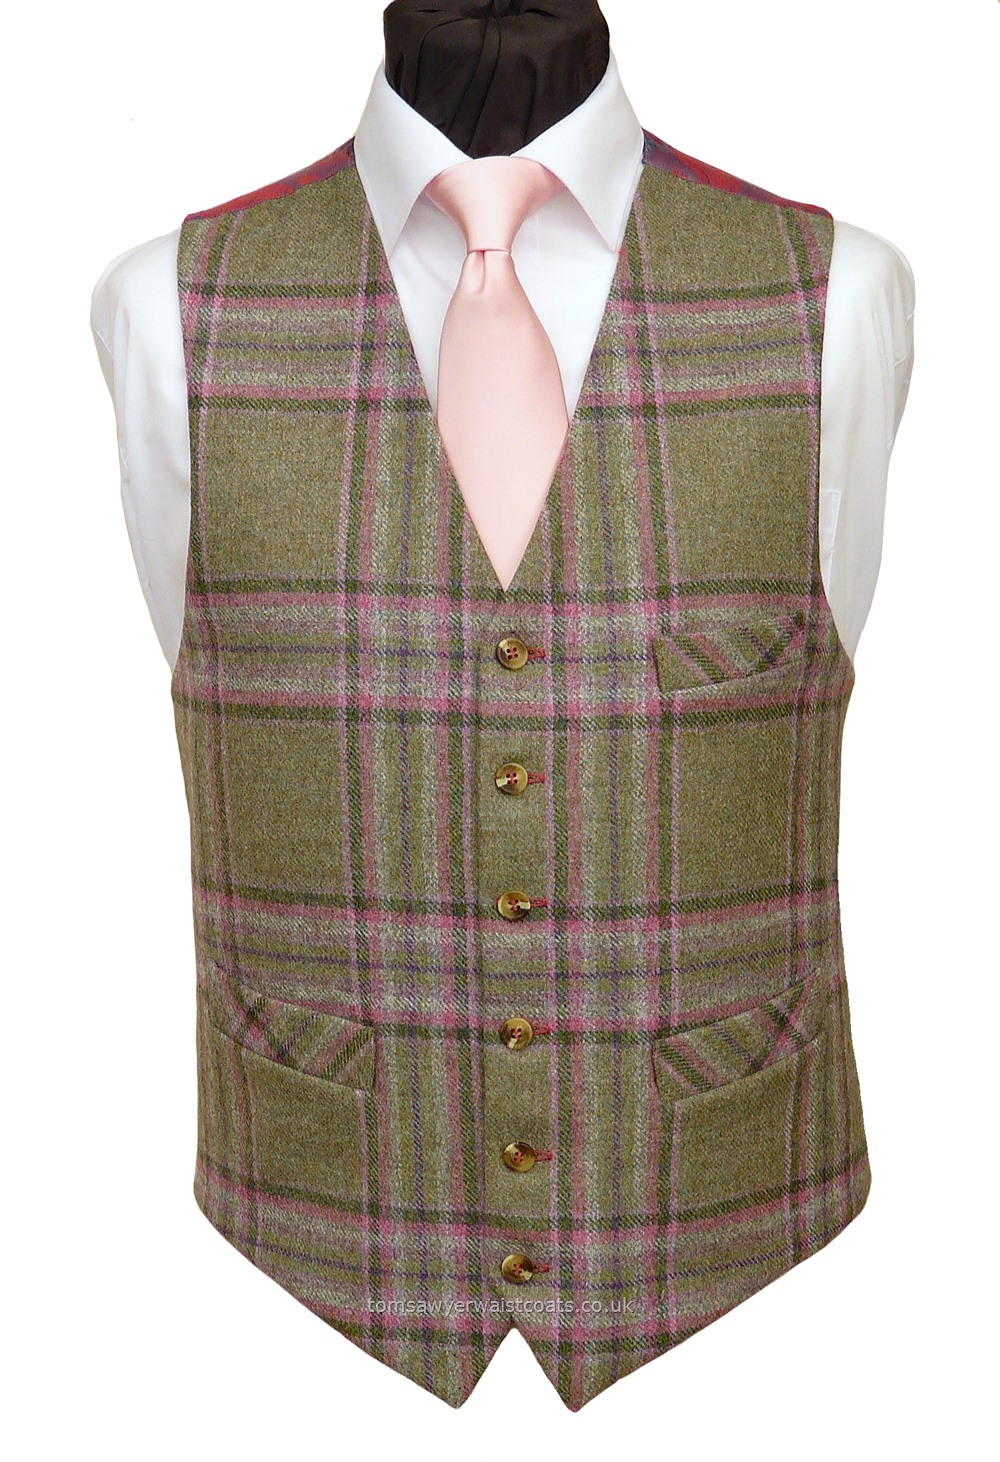 Traditional Waistcoats : Informal Waistcoats & Gentleman's Waistcoats : Green with pink and purple Check Tweed Waistcoat